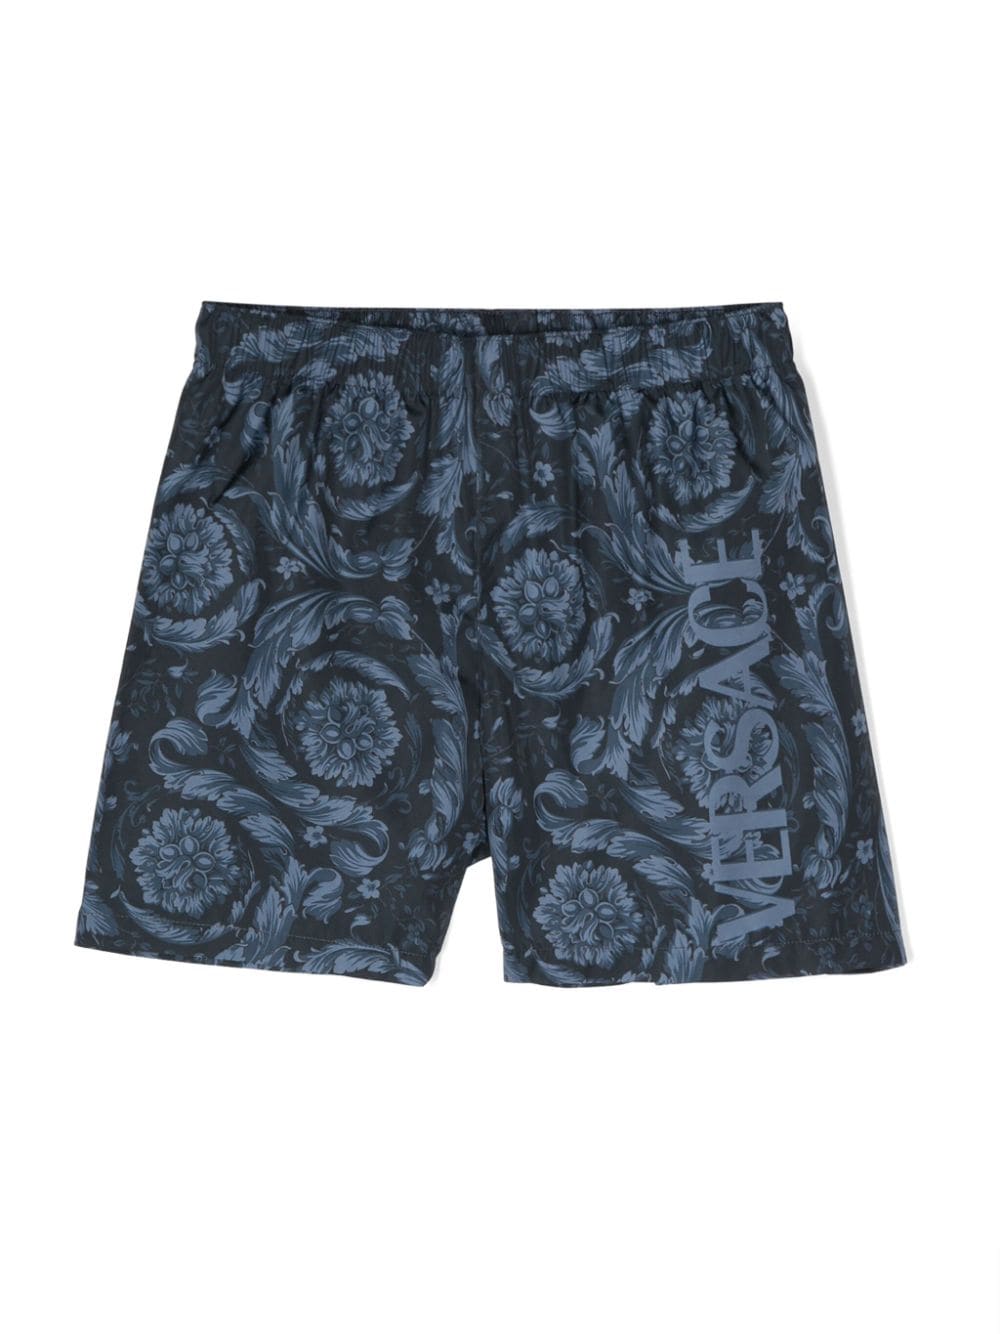 Barocco-print swim shorts<BR/><BR/><BR/>